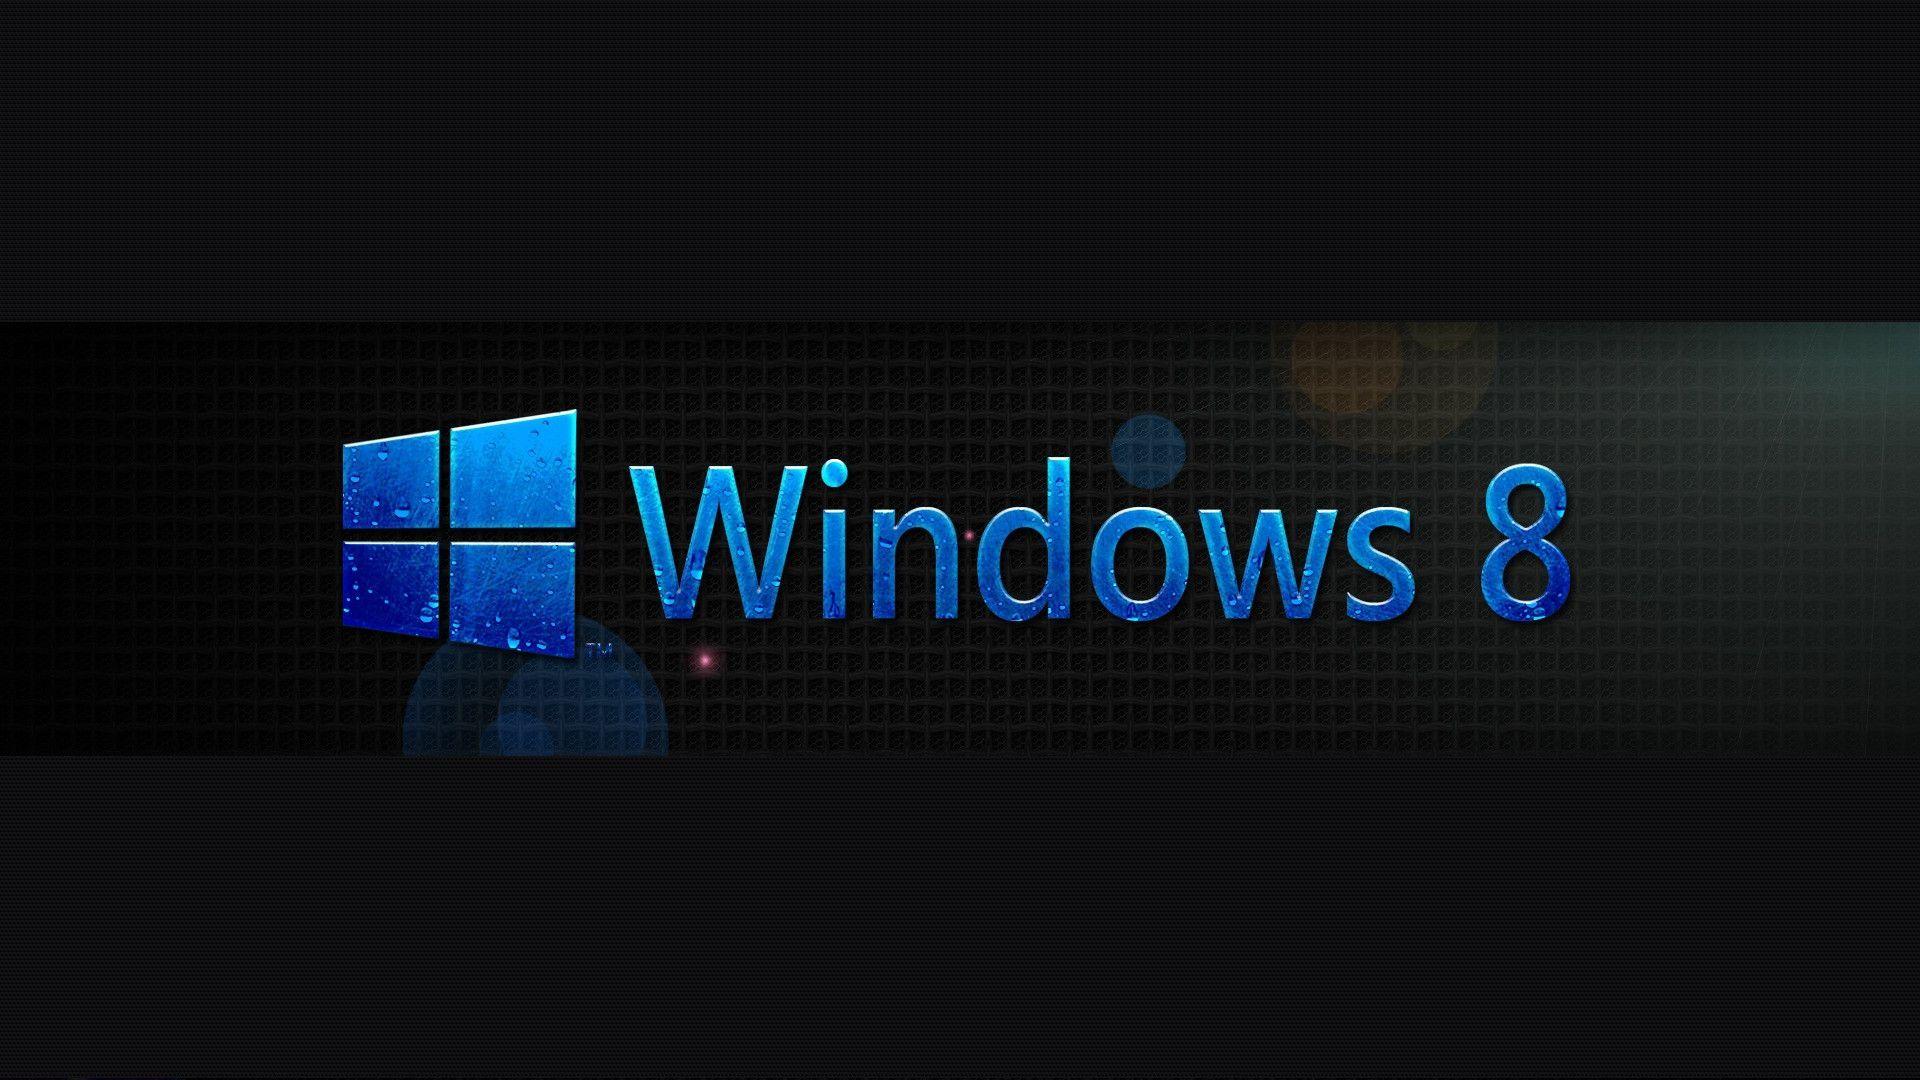 Windows 8 Black and blue desktop wallpaper